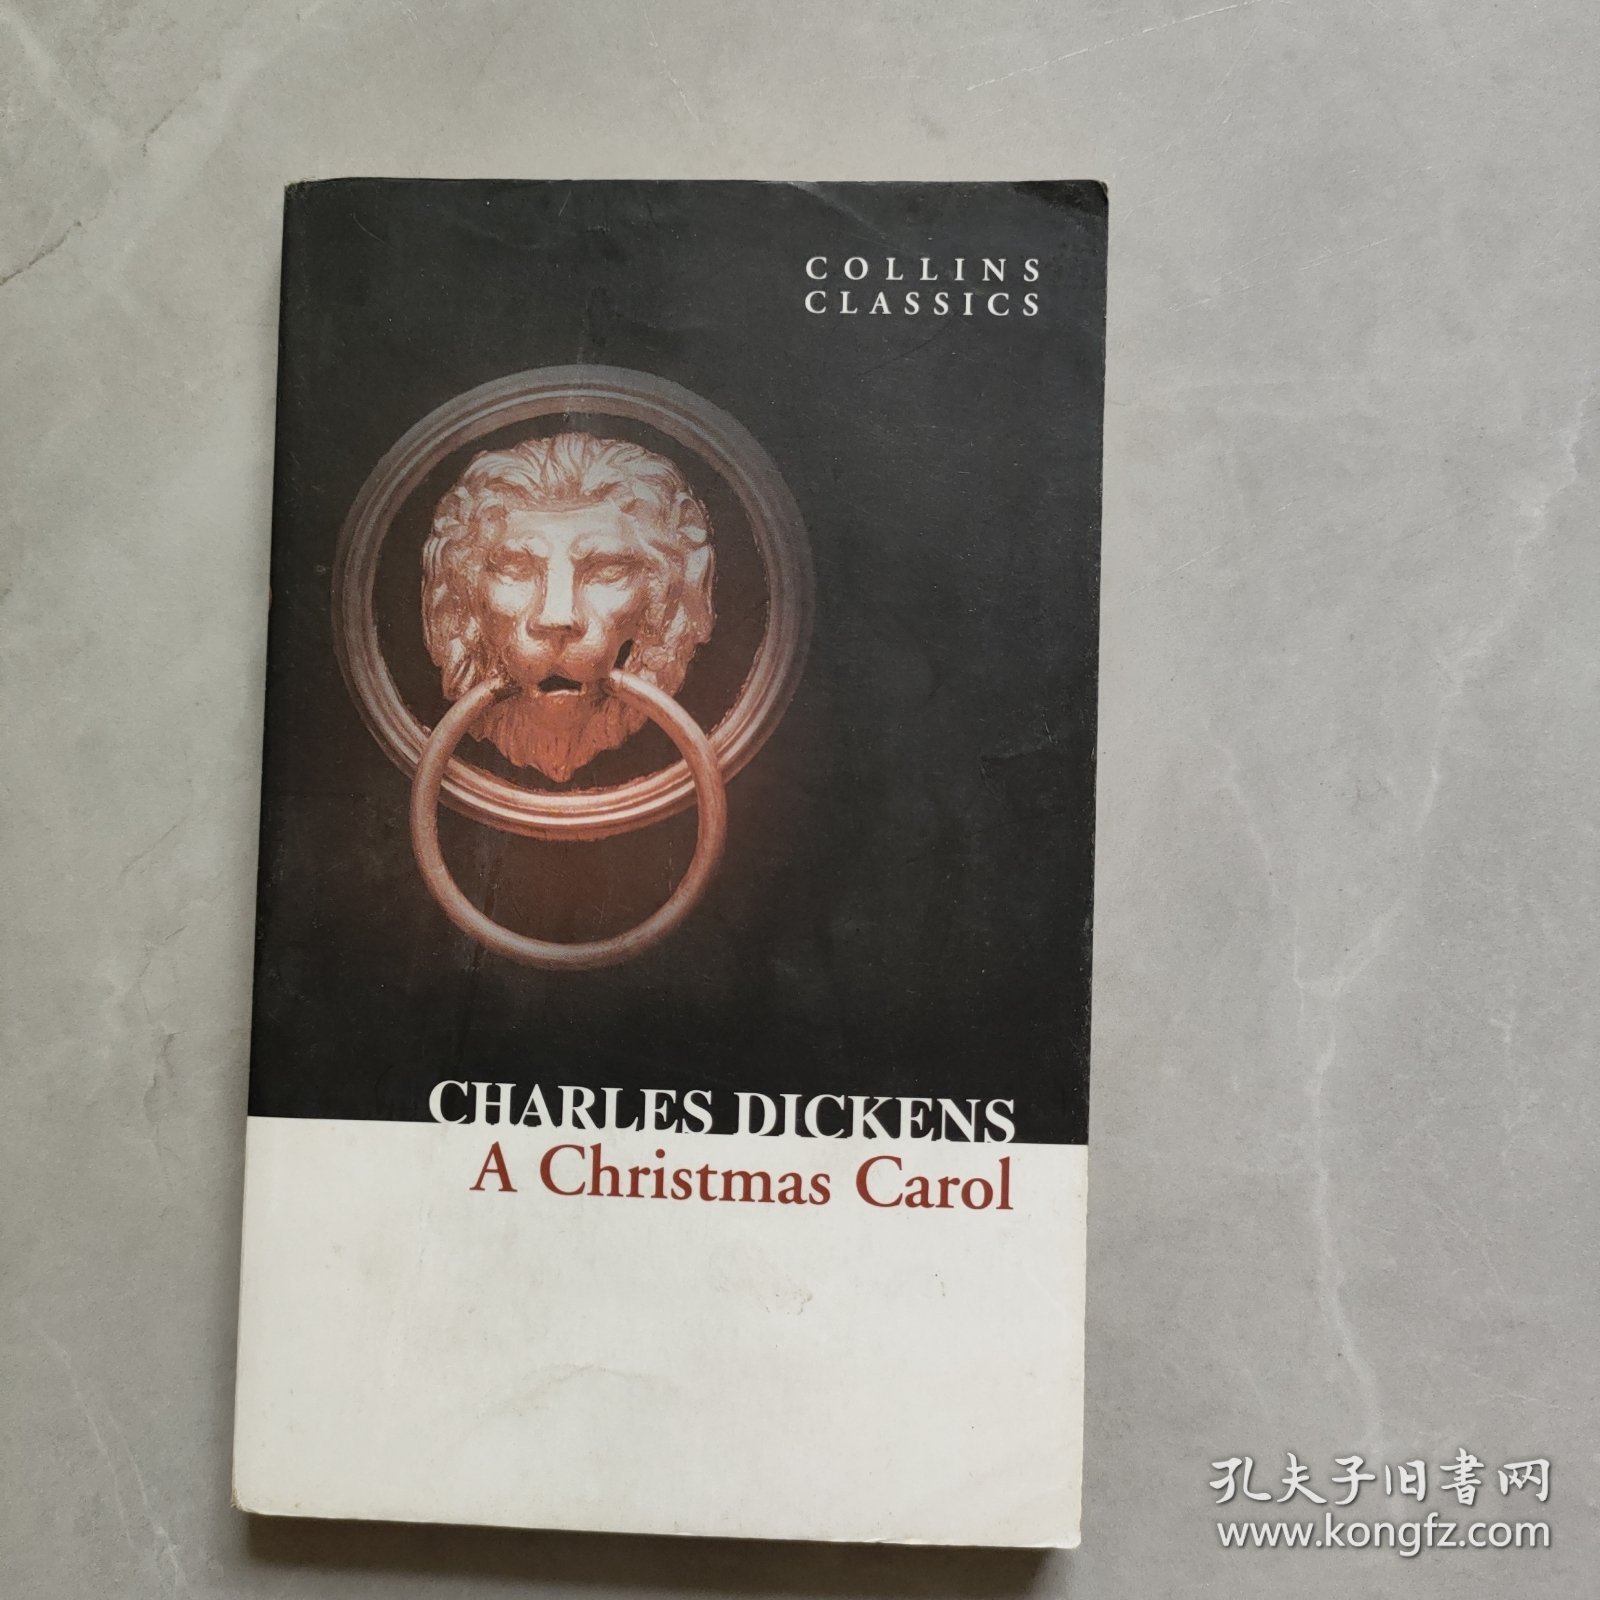 CHARLES DICKENS A Christmas Carol 查尔斯唱圣诞颂歌